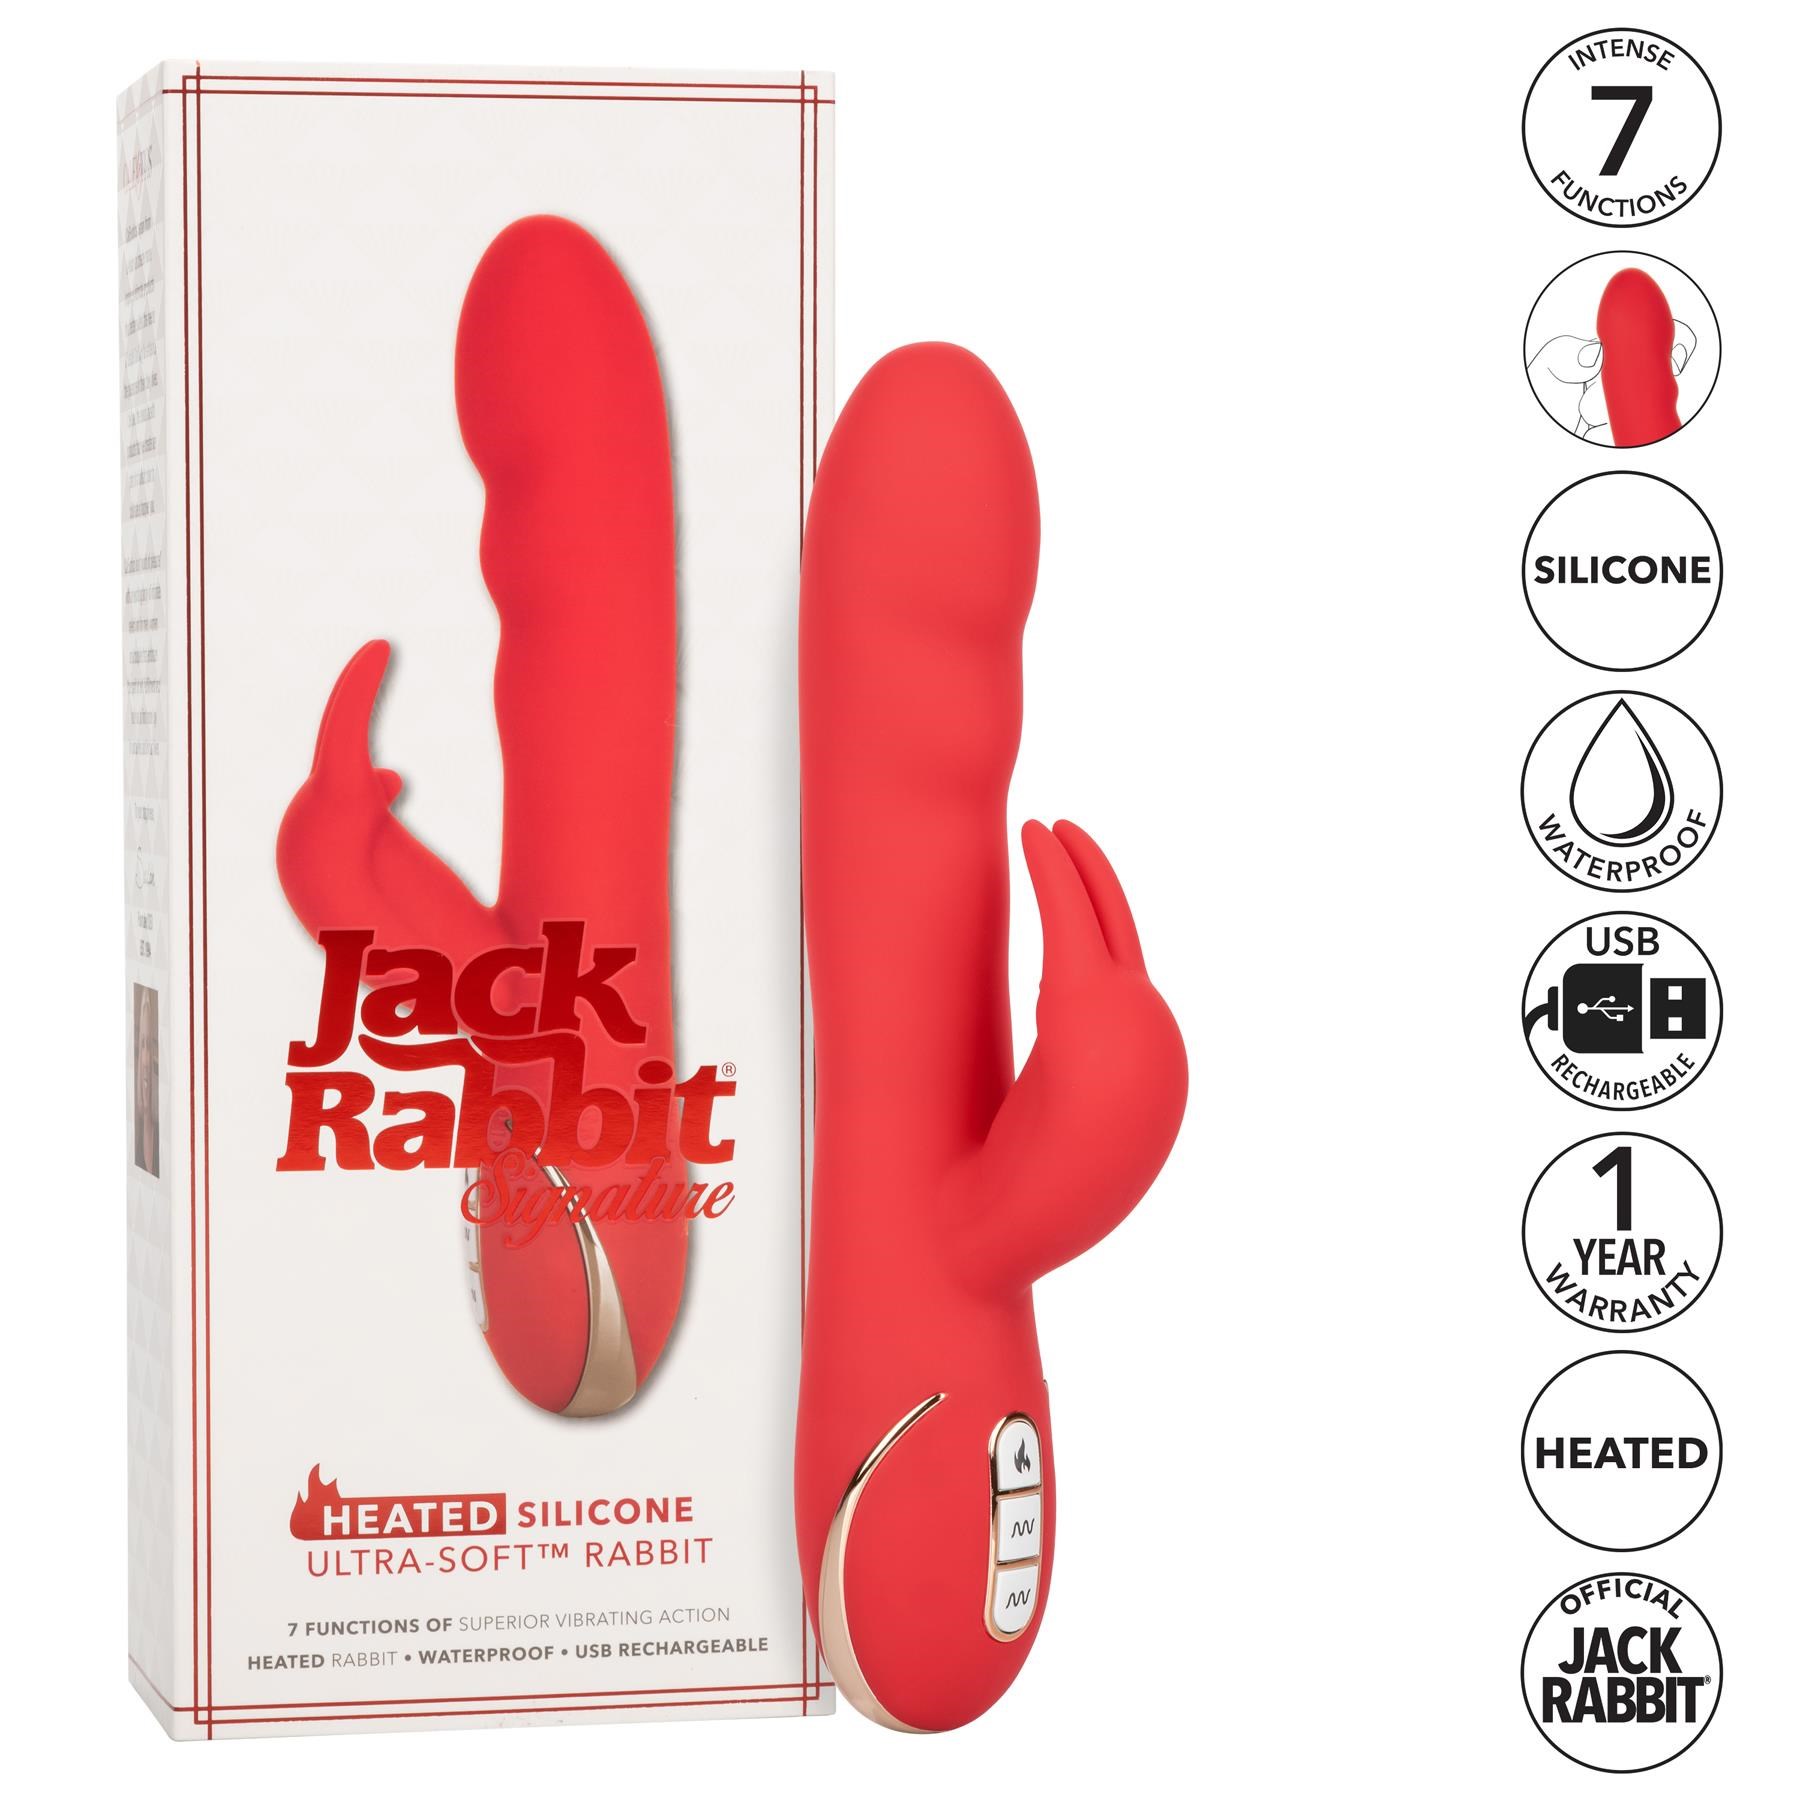 Jack Rabbit Heated Ultra-Soft Rabbit- Features